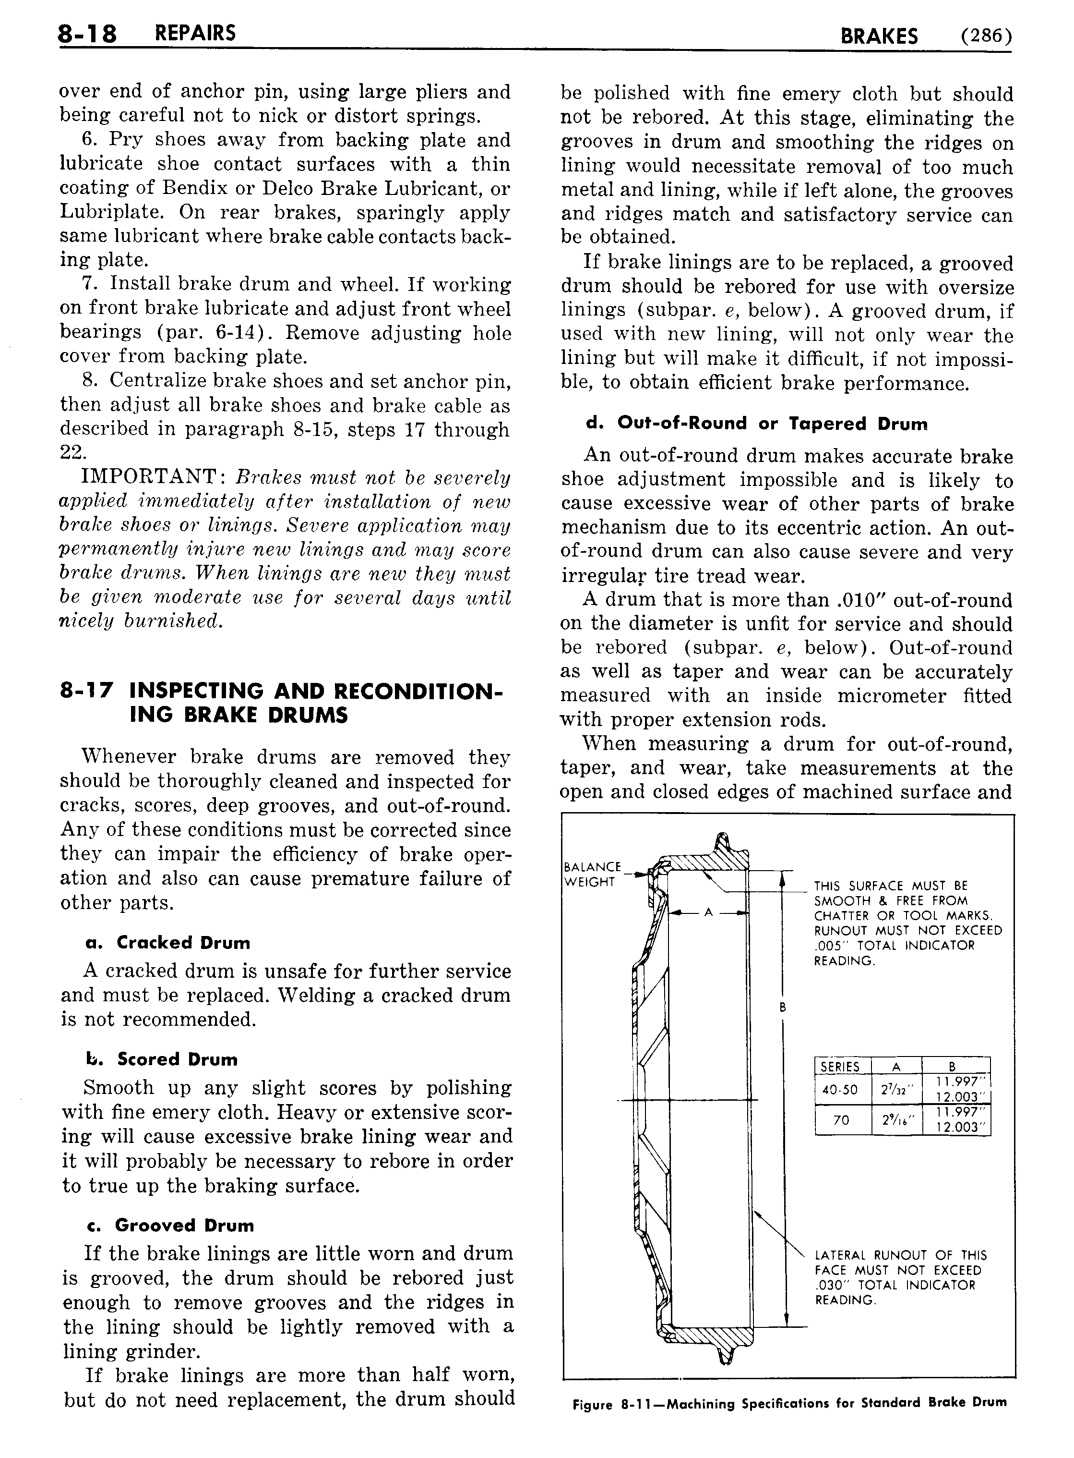 n_09 1951 Buick Shop Manual - Brakes-018-018.jpg